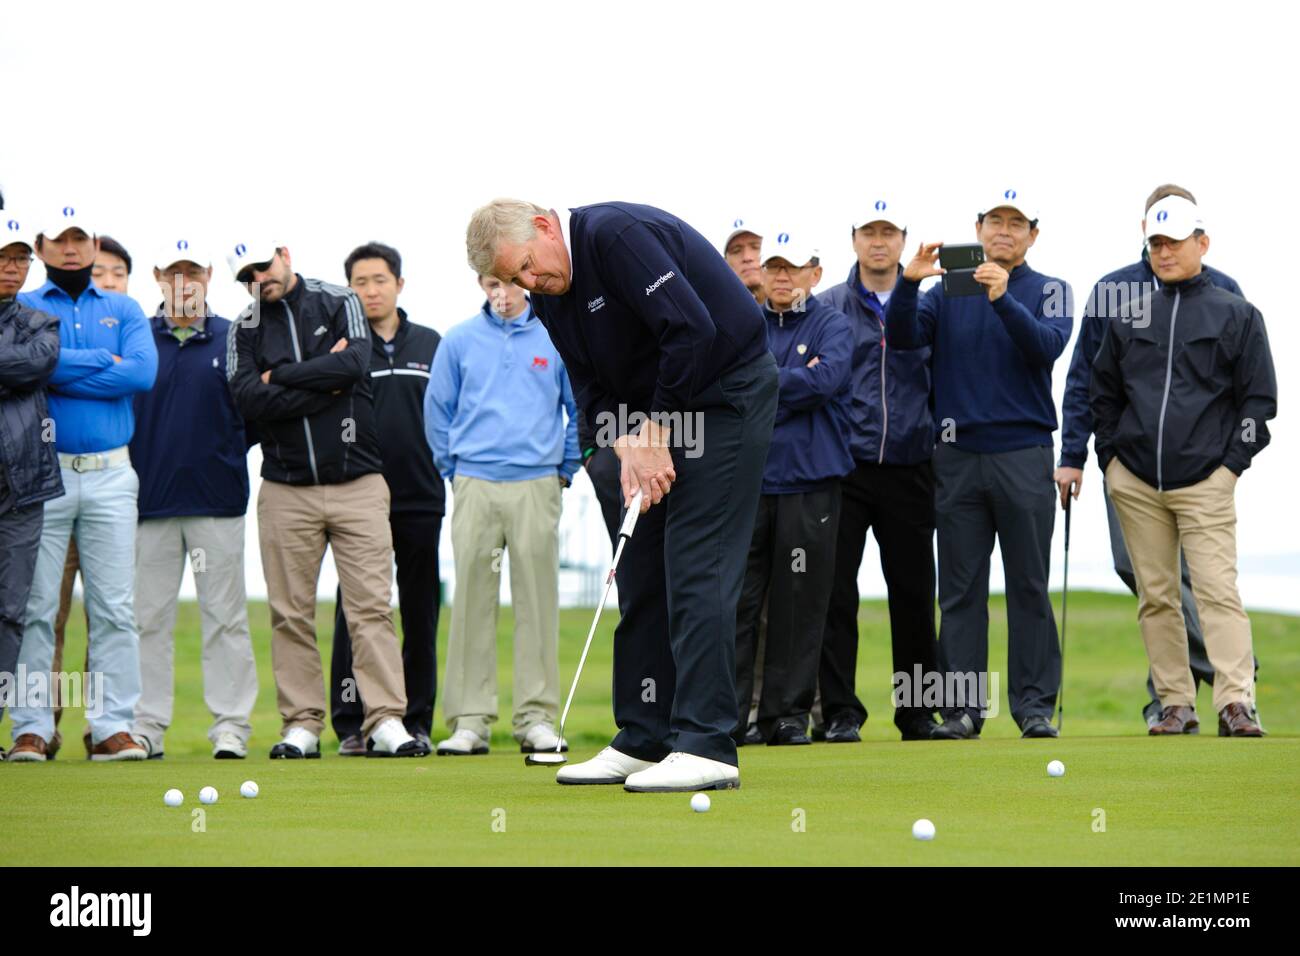 Scottish professional golfer Colin Montgomerie, OBE coaching a corprate group Stock Photo